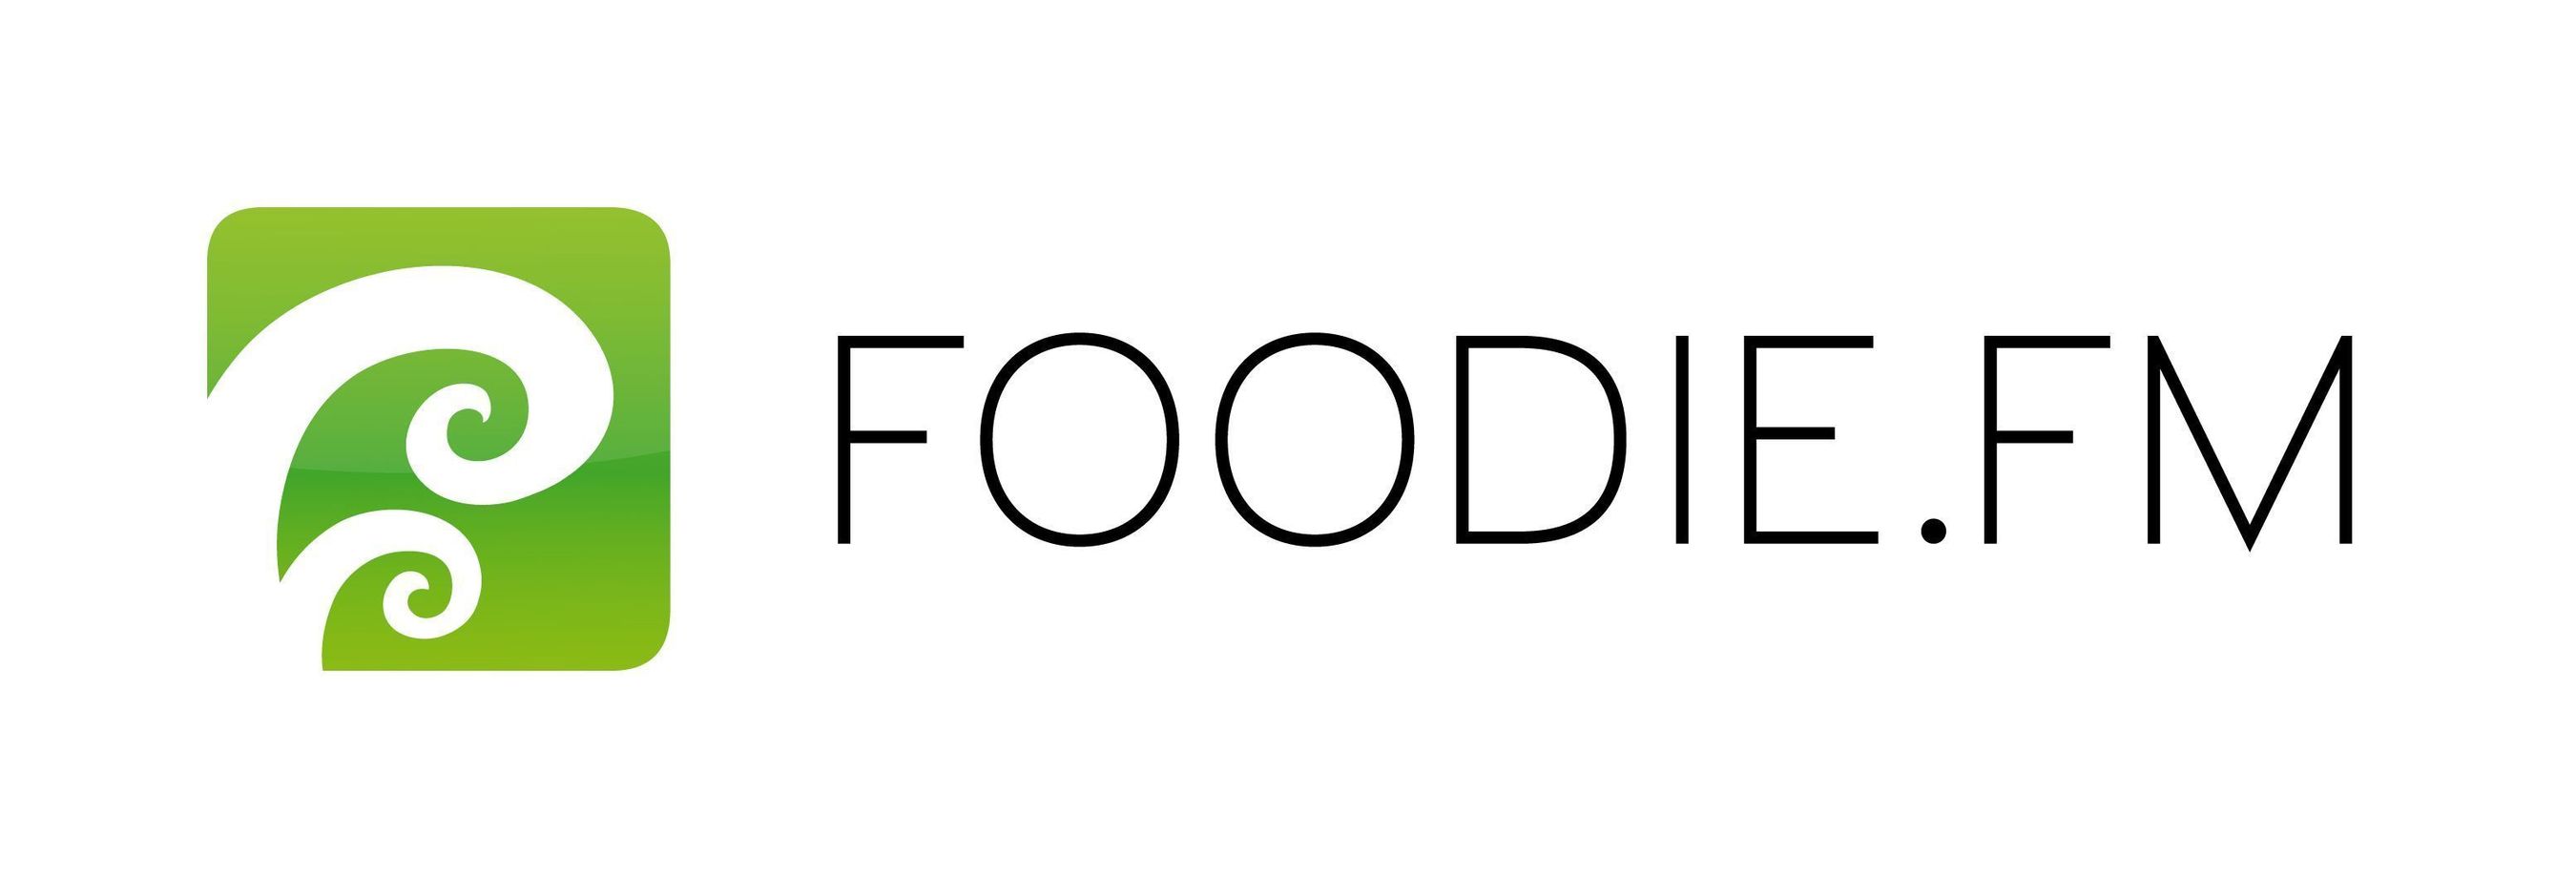 Foodie.fm Logo (PRNewsFoto/Digital Foodie Ltd)